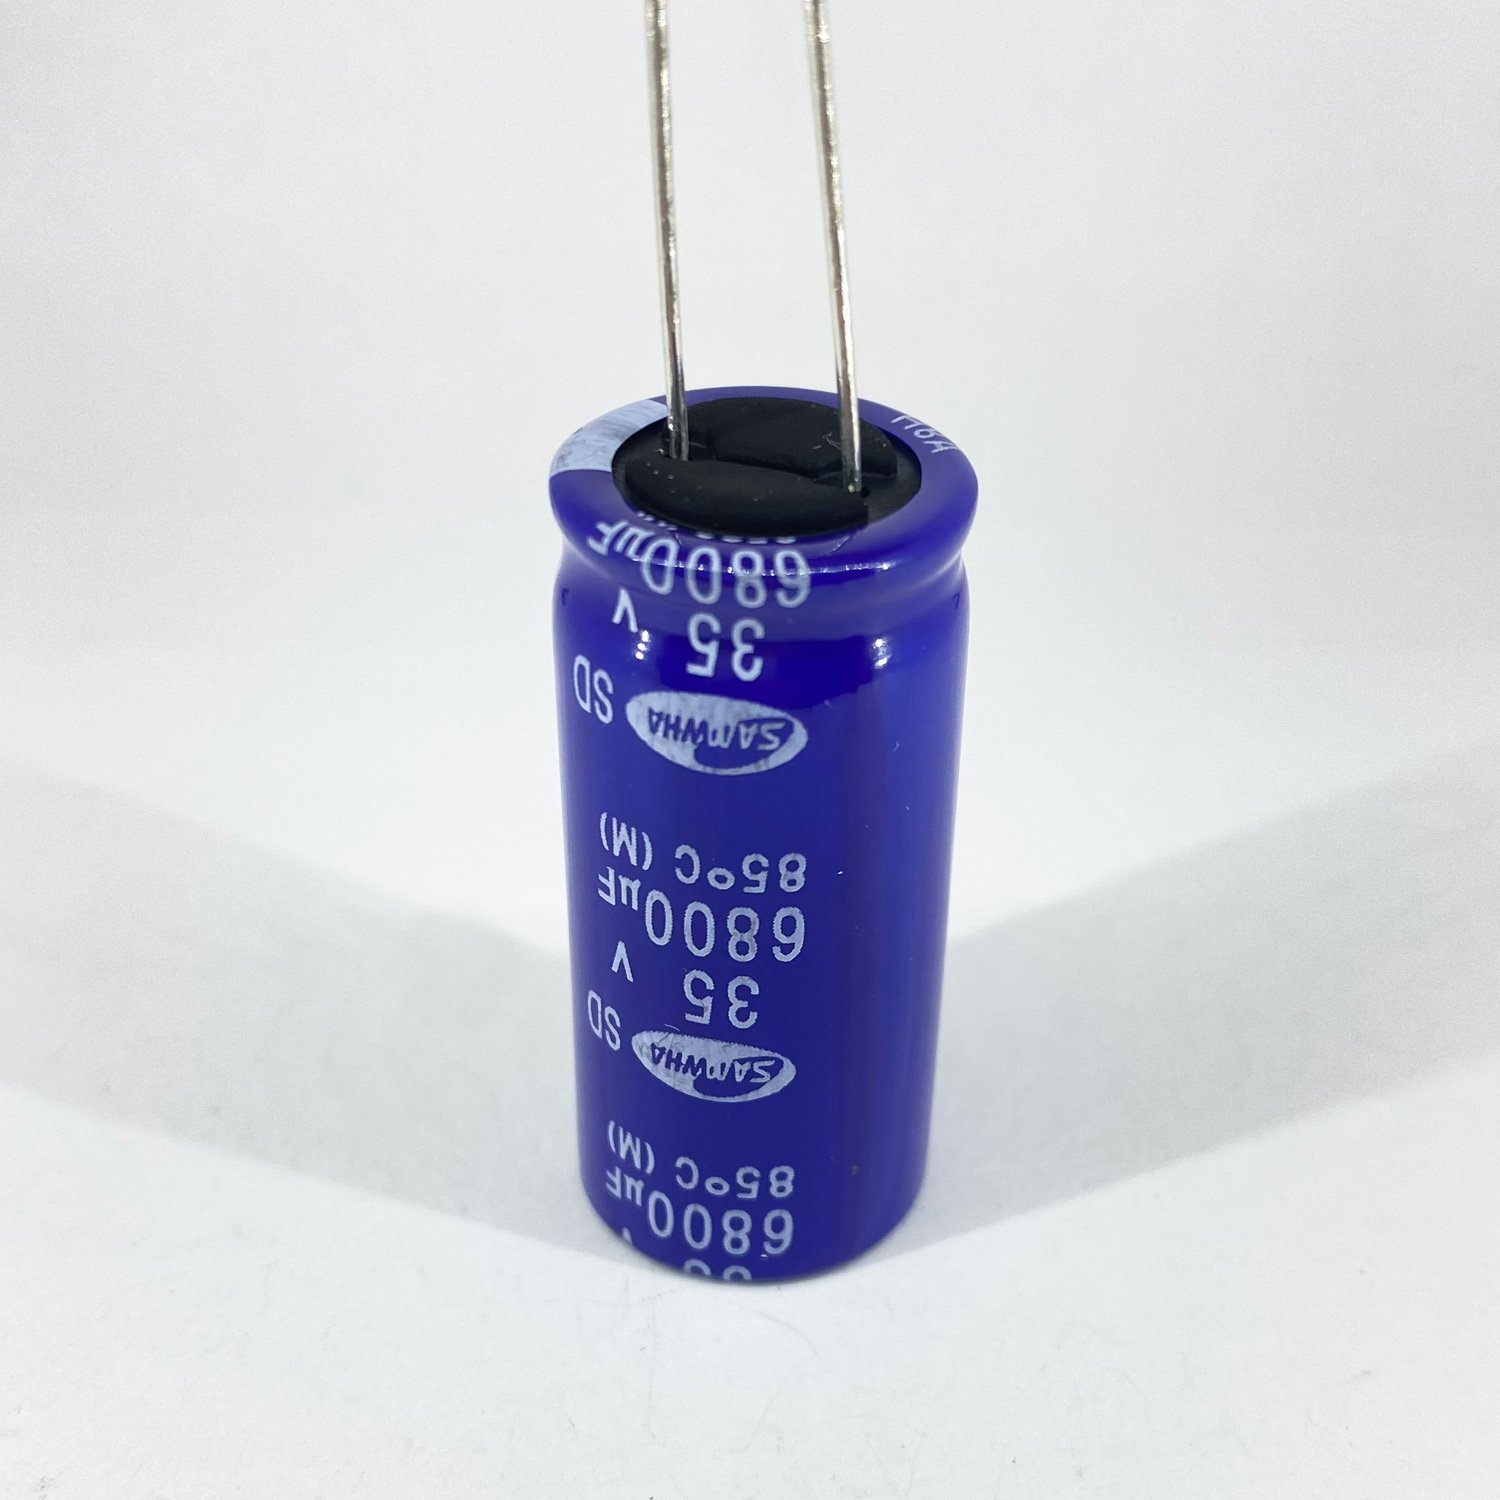 Электролитические конденсаторы 6800 мкф x 35 В - 18x40 мм 85 °C SAMWHA, фото